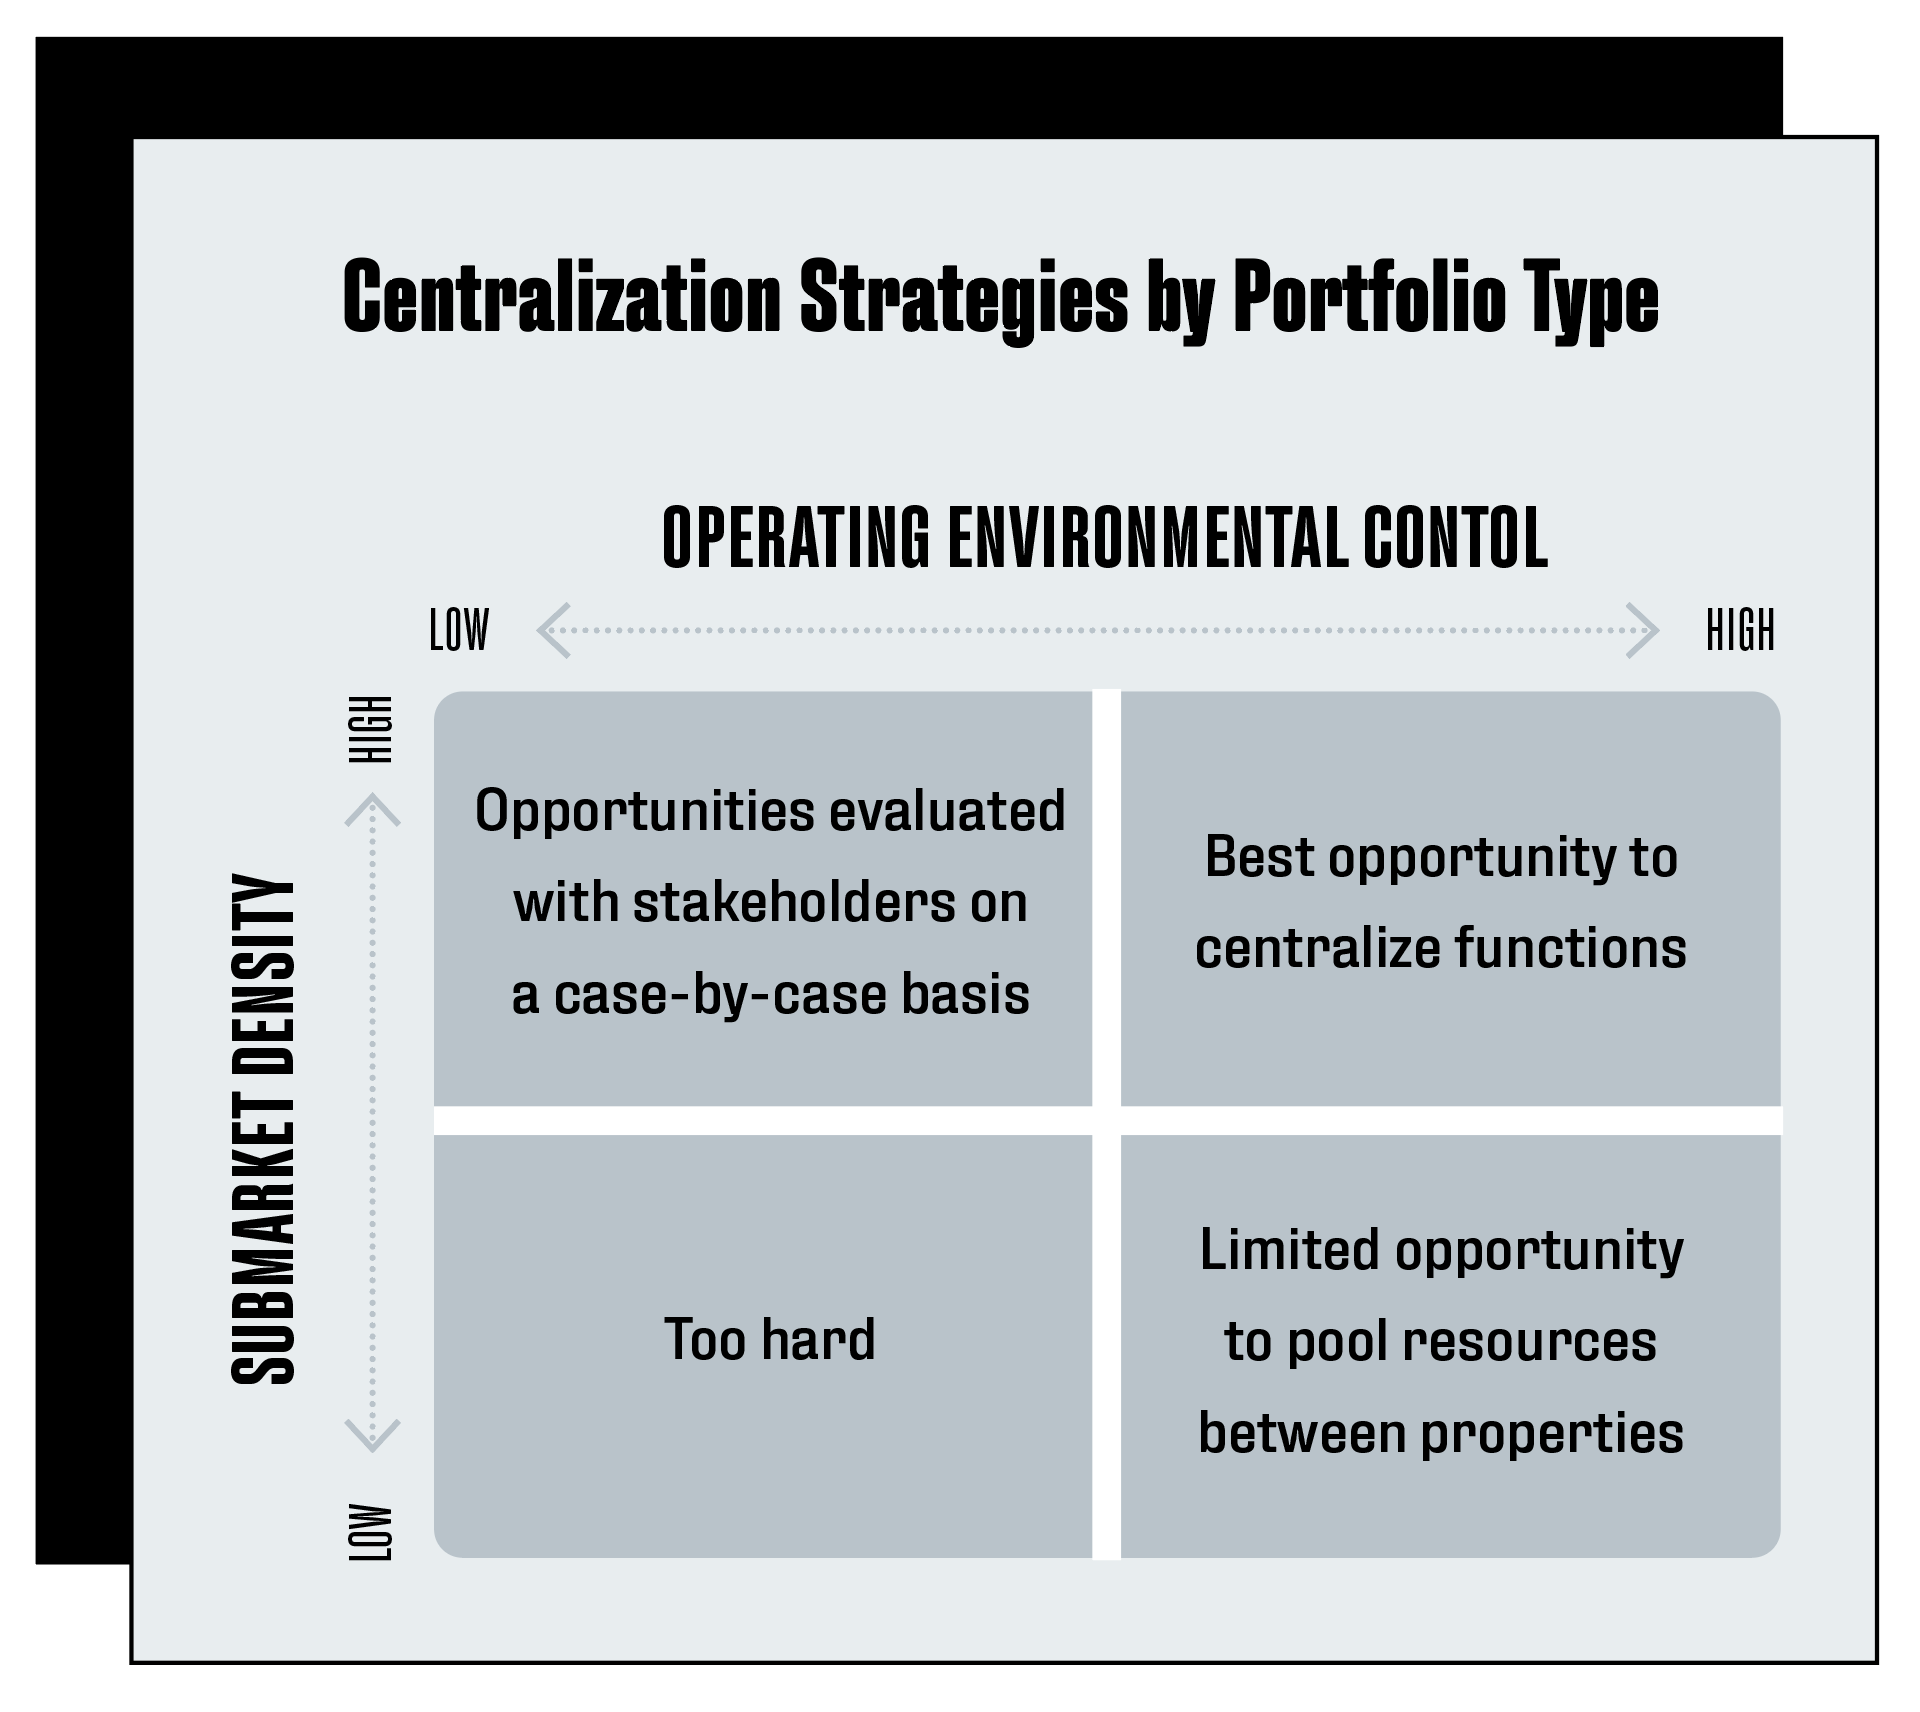 centralization strategies by portfolio type - chart